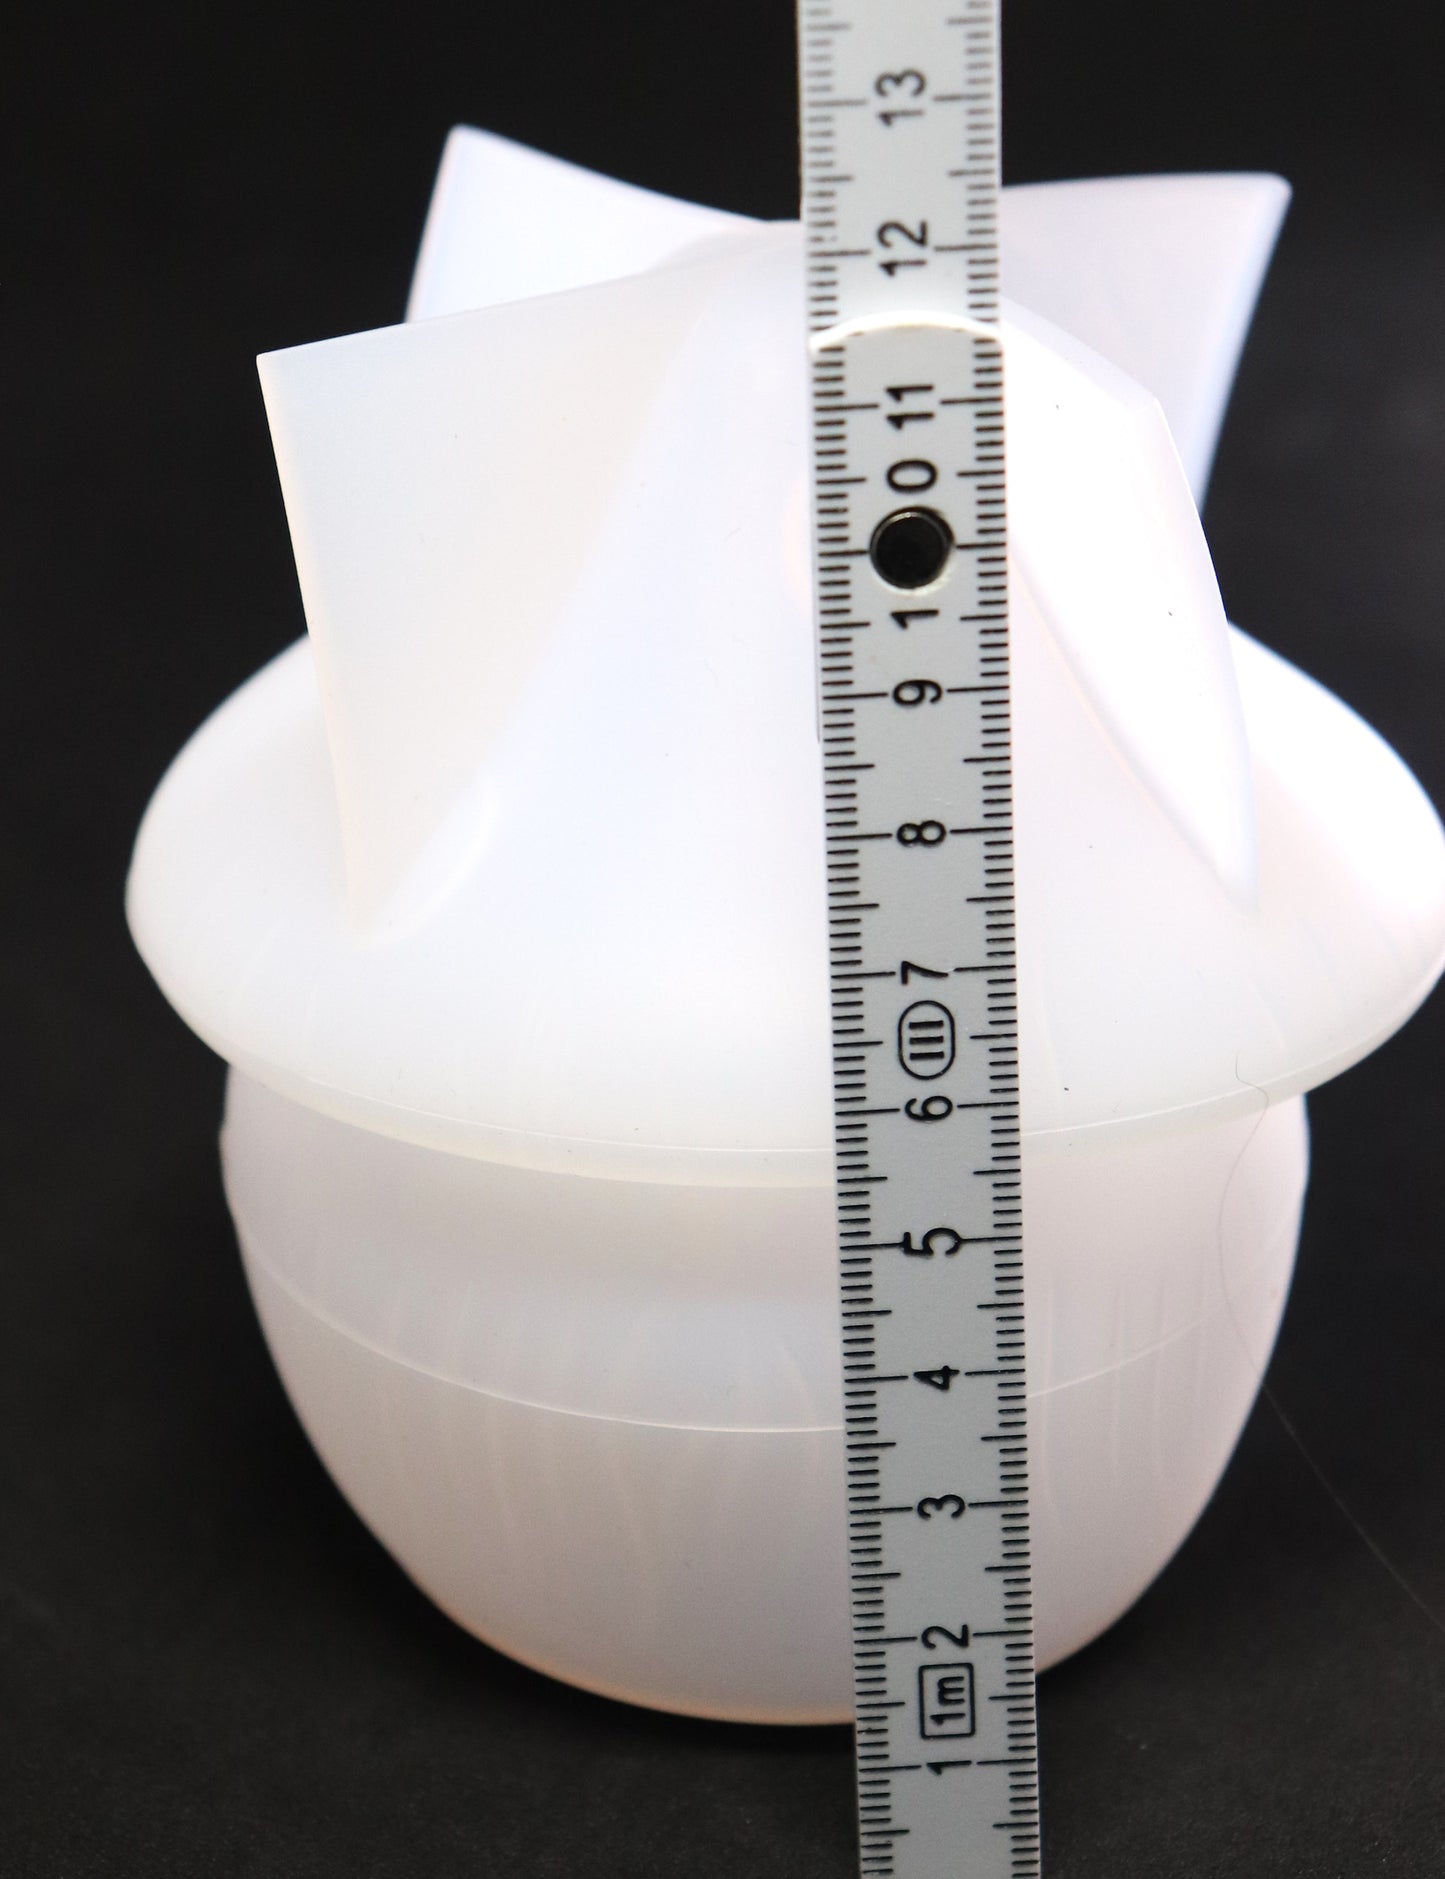 Silikonform 3D Pilz mit Deckel Gießform für Epoxidharz, Raysin ca. 10,5 cm